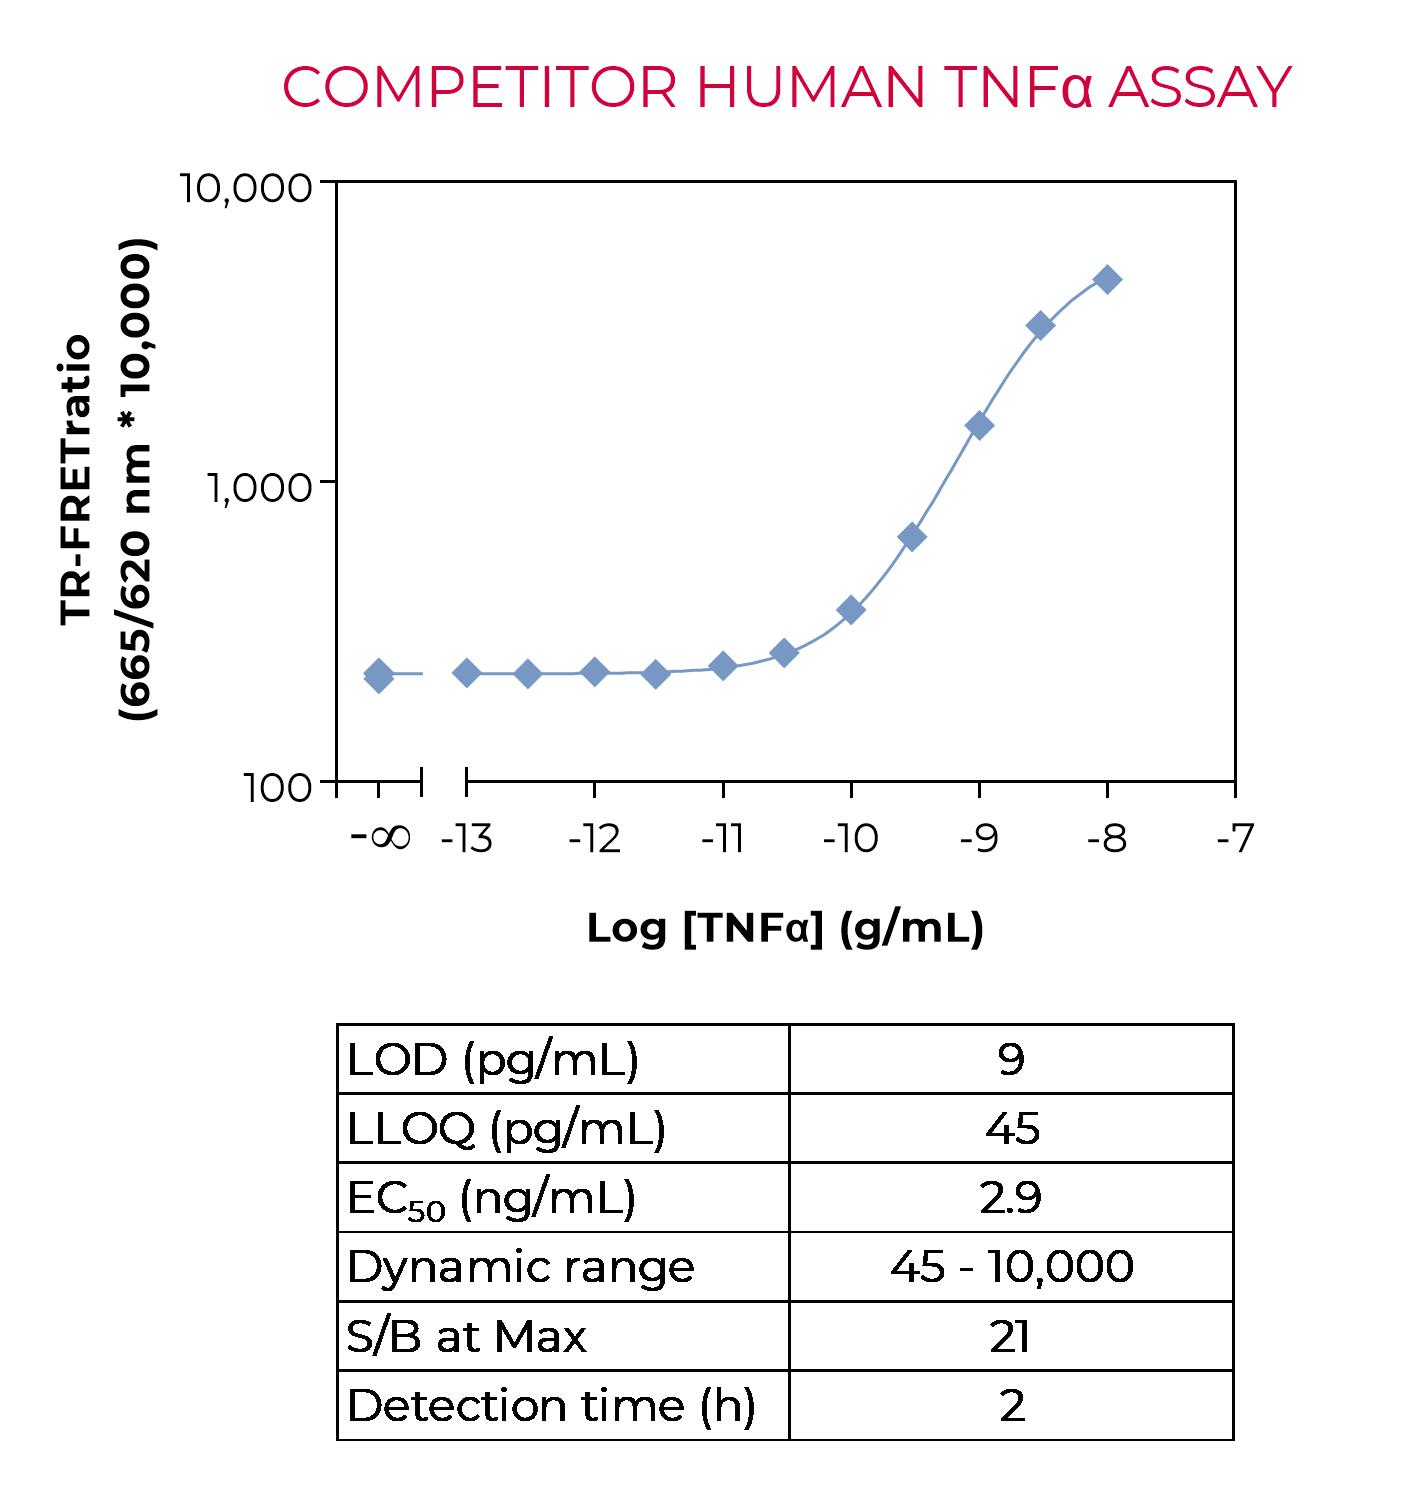 Competitor Human TNFα standard curve